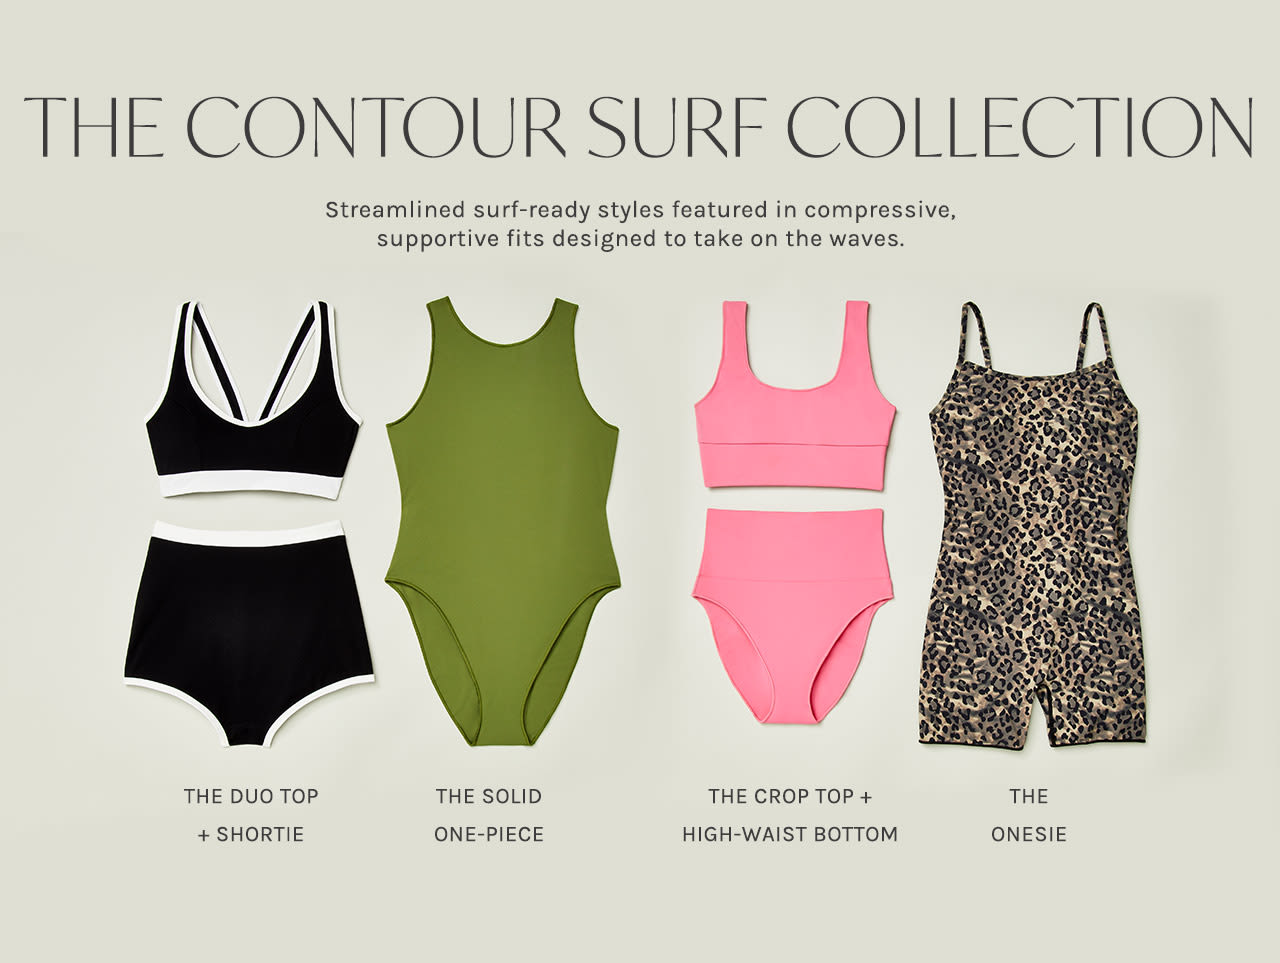 The Contour Surf Collection